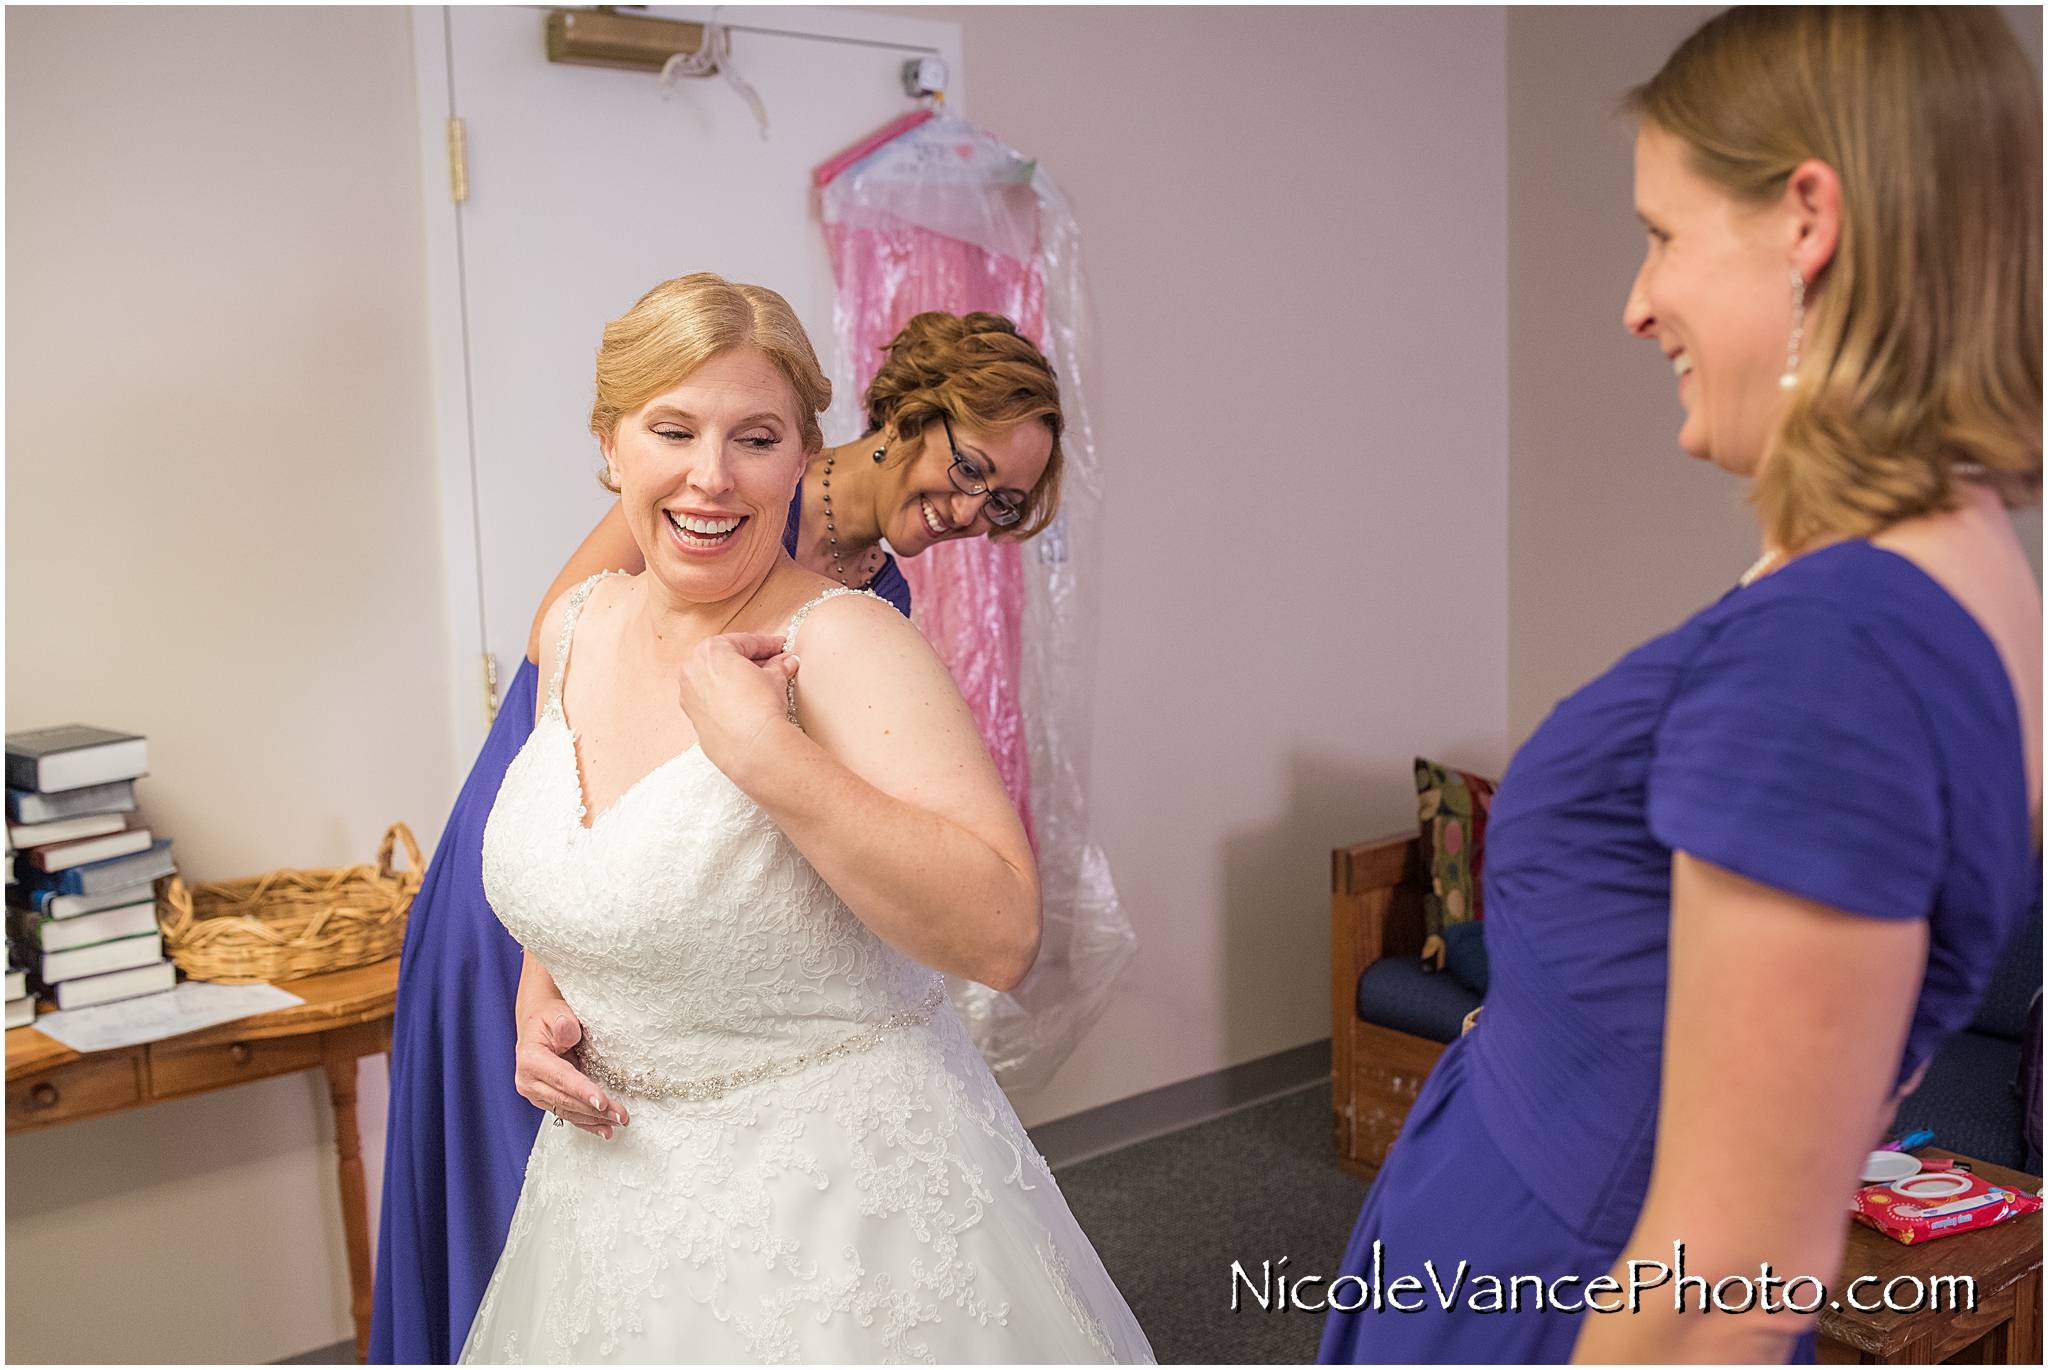 Bridemaids help the bride put on her bridal gown, a Jessica Ingram design.